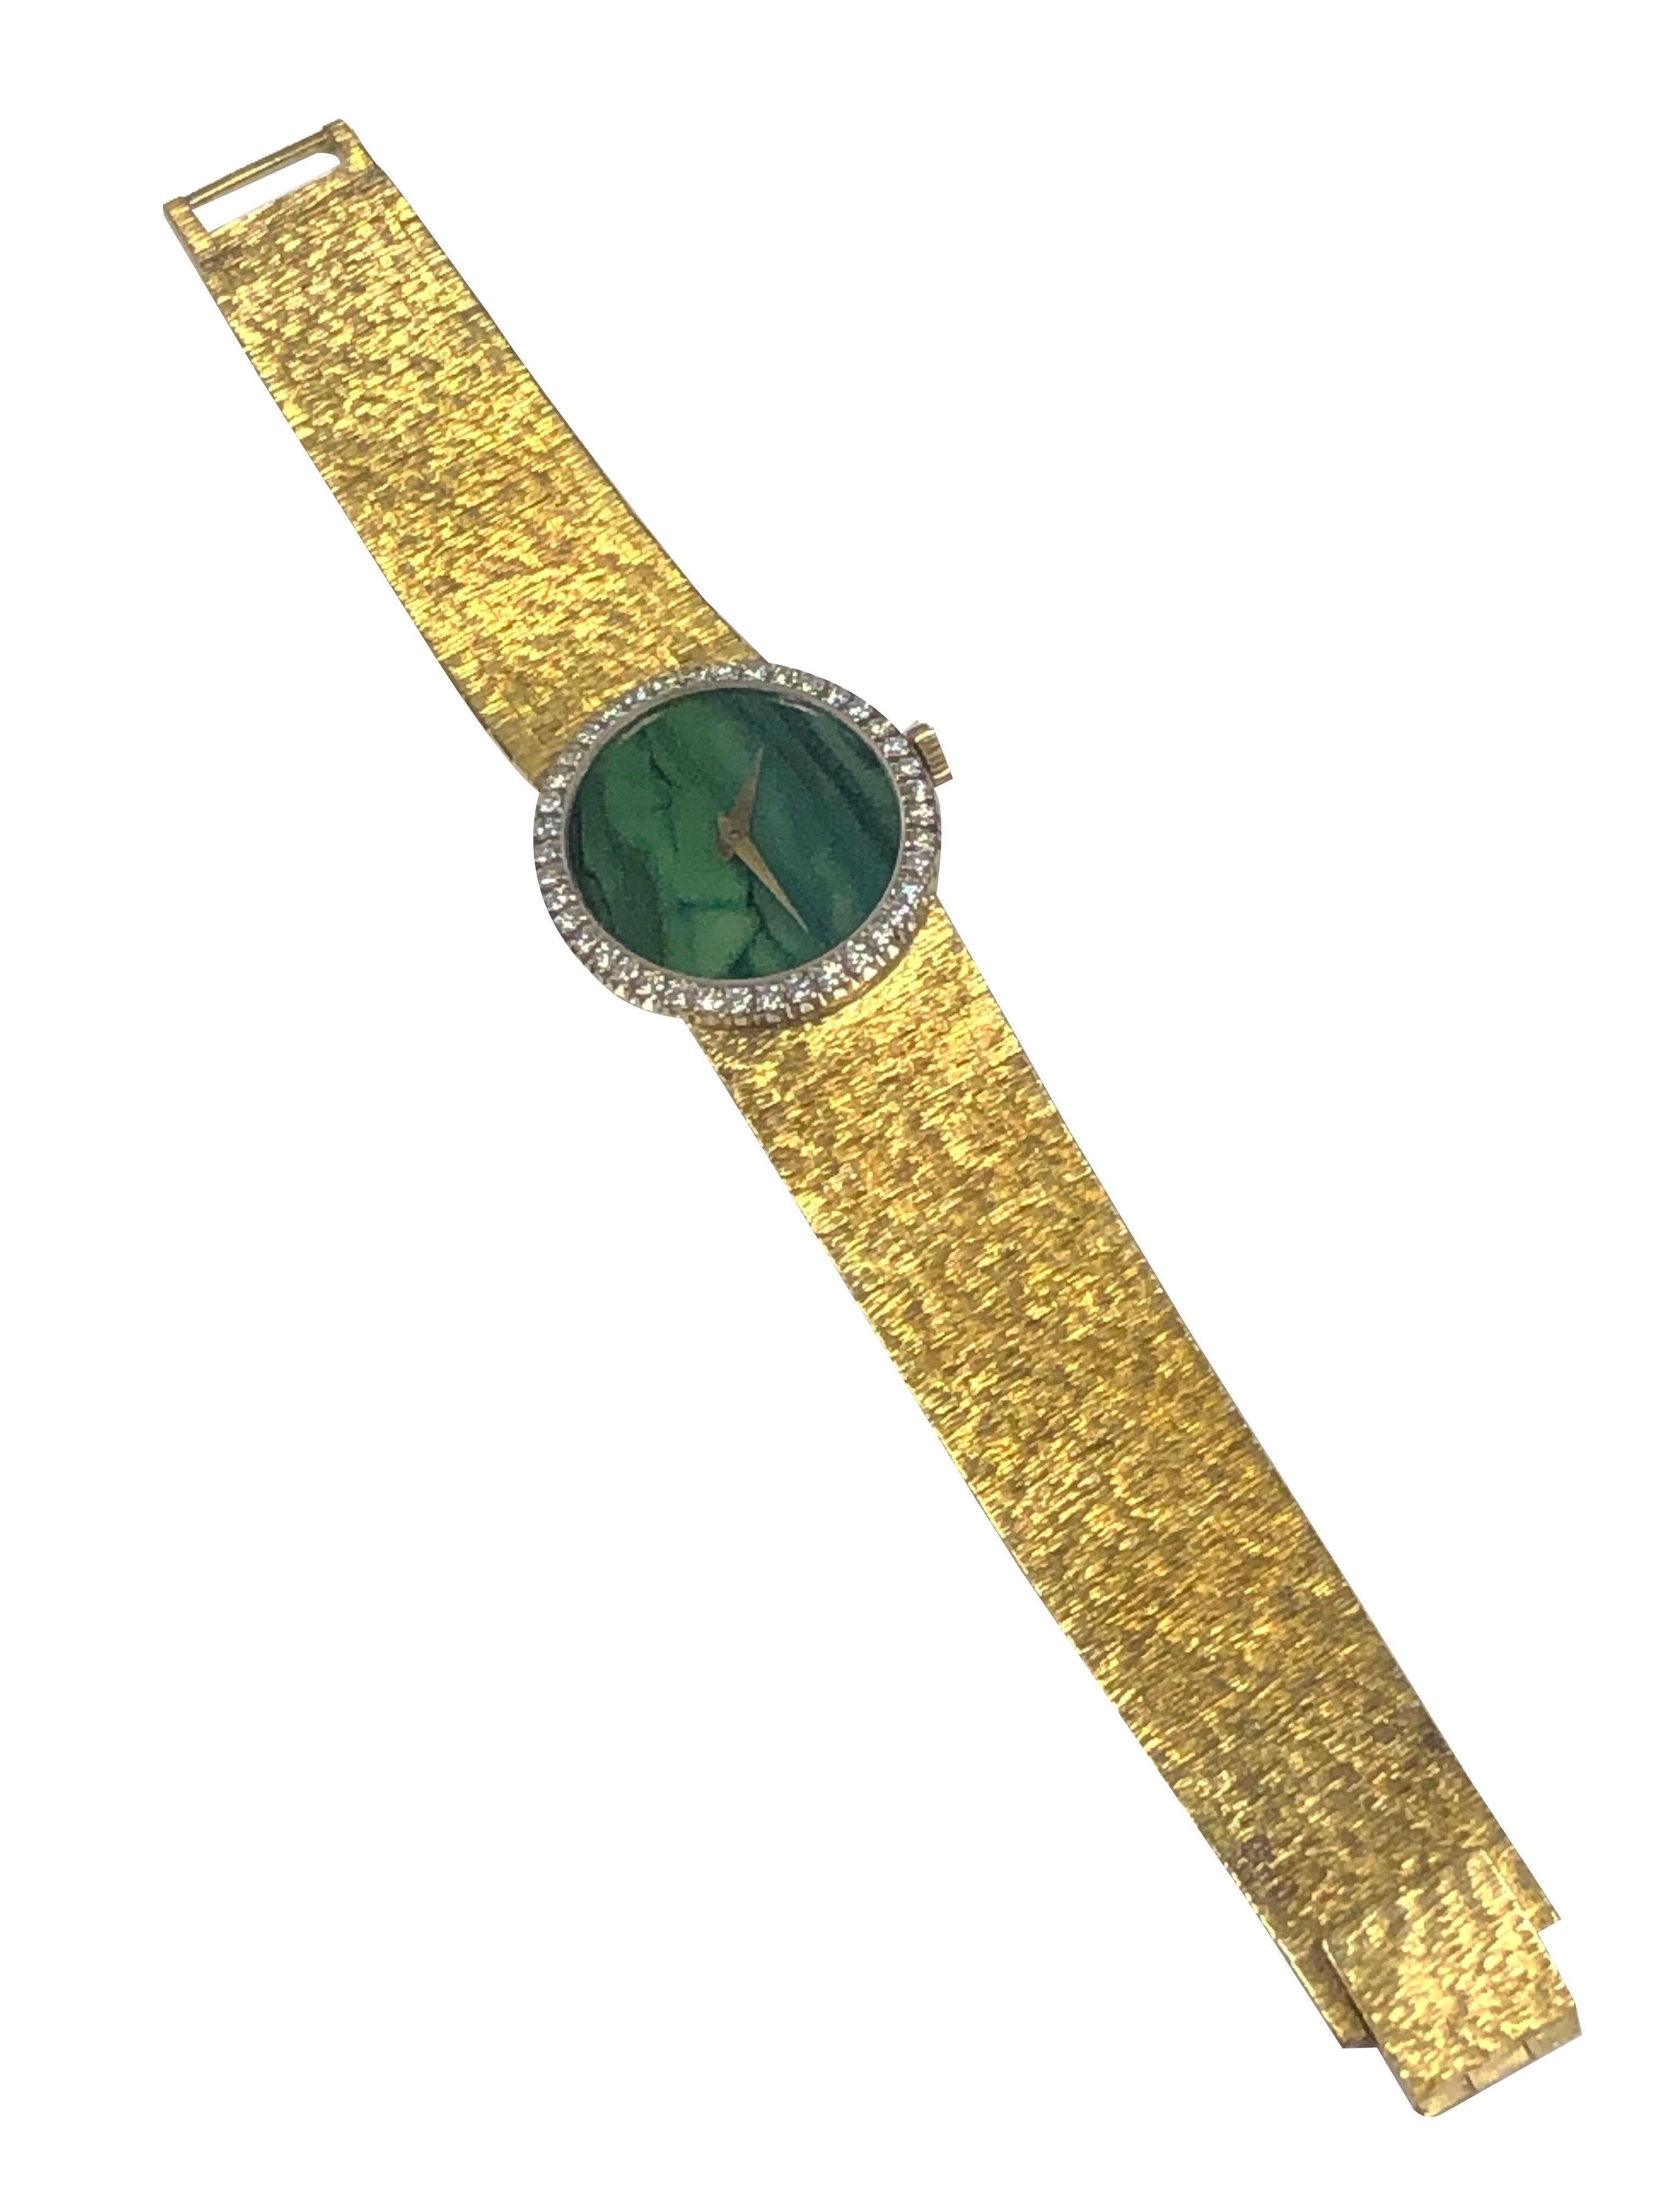 Round Cut Piaget Yellow Gold Diamond and Jade Dial Ladies Wrist Watch